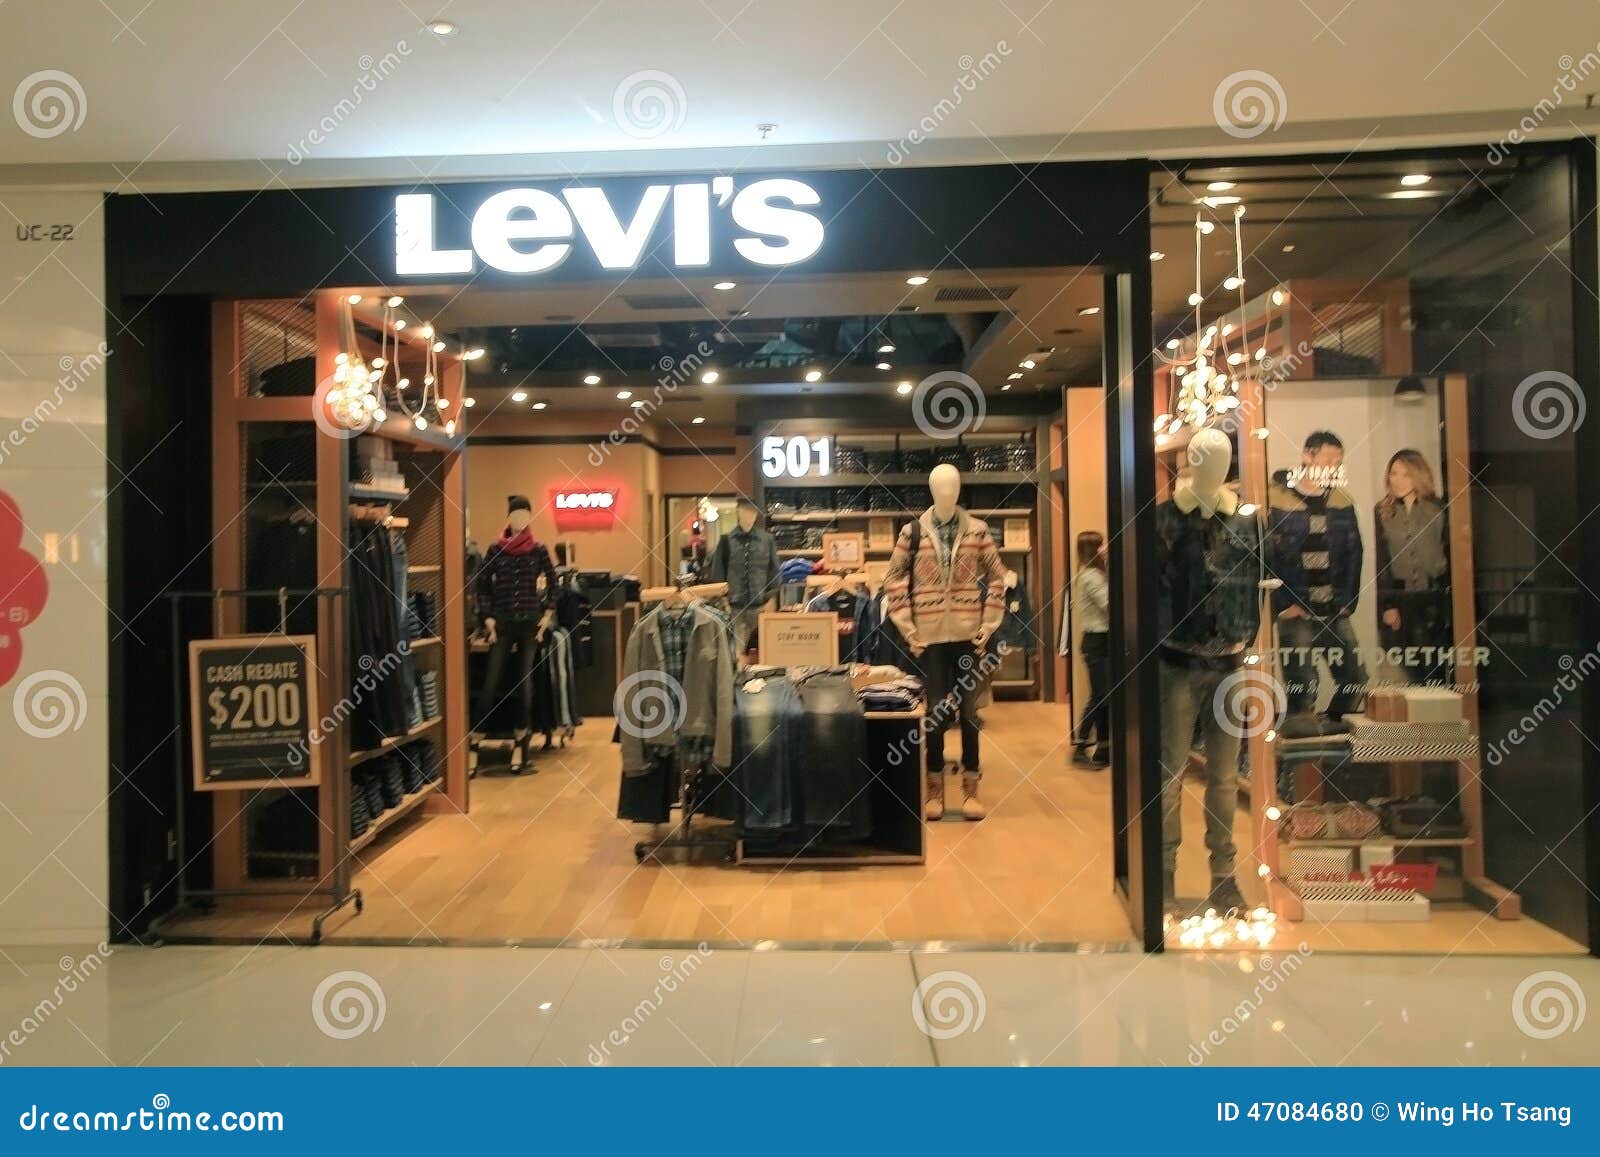 levi's 501 store near me Cheaper Than 